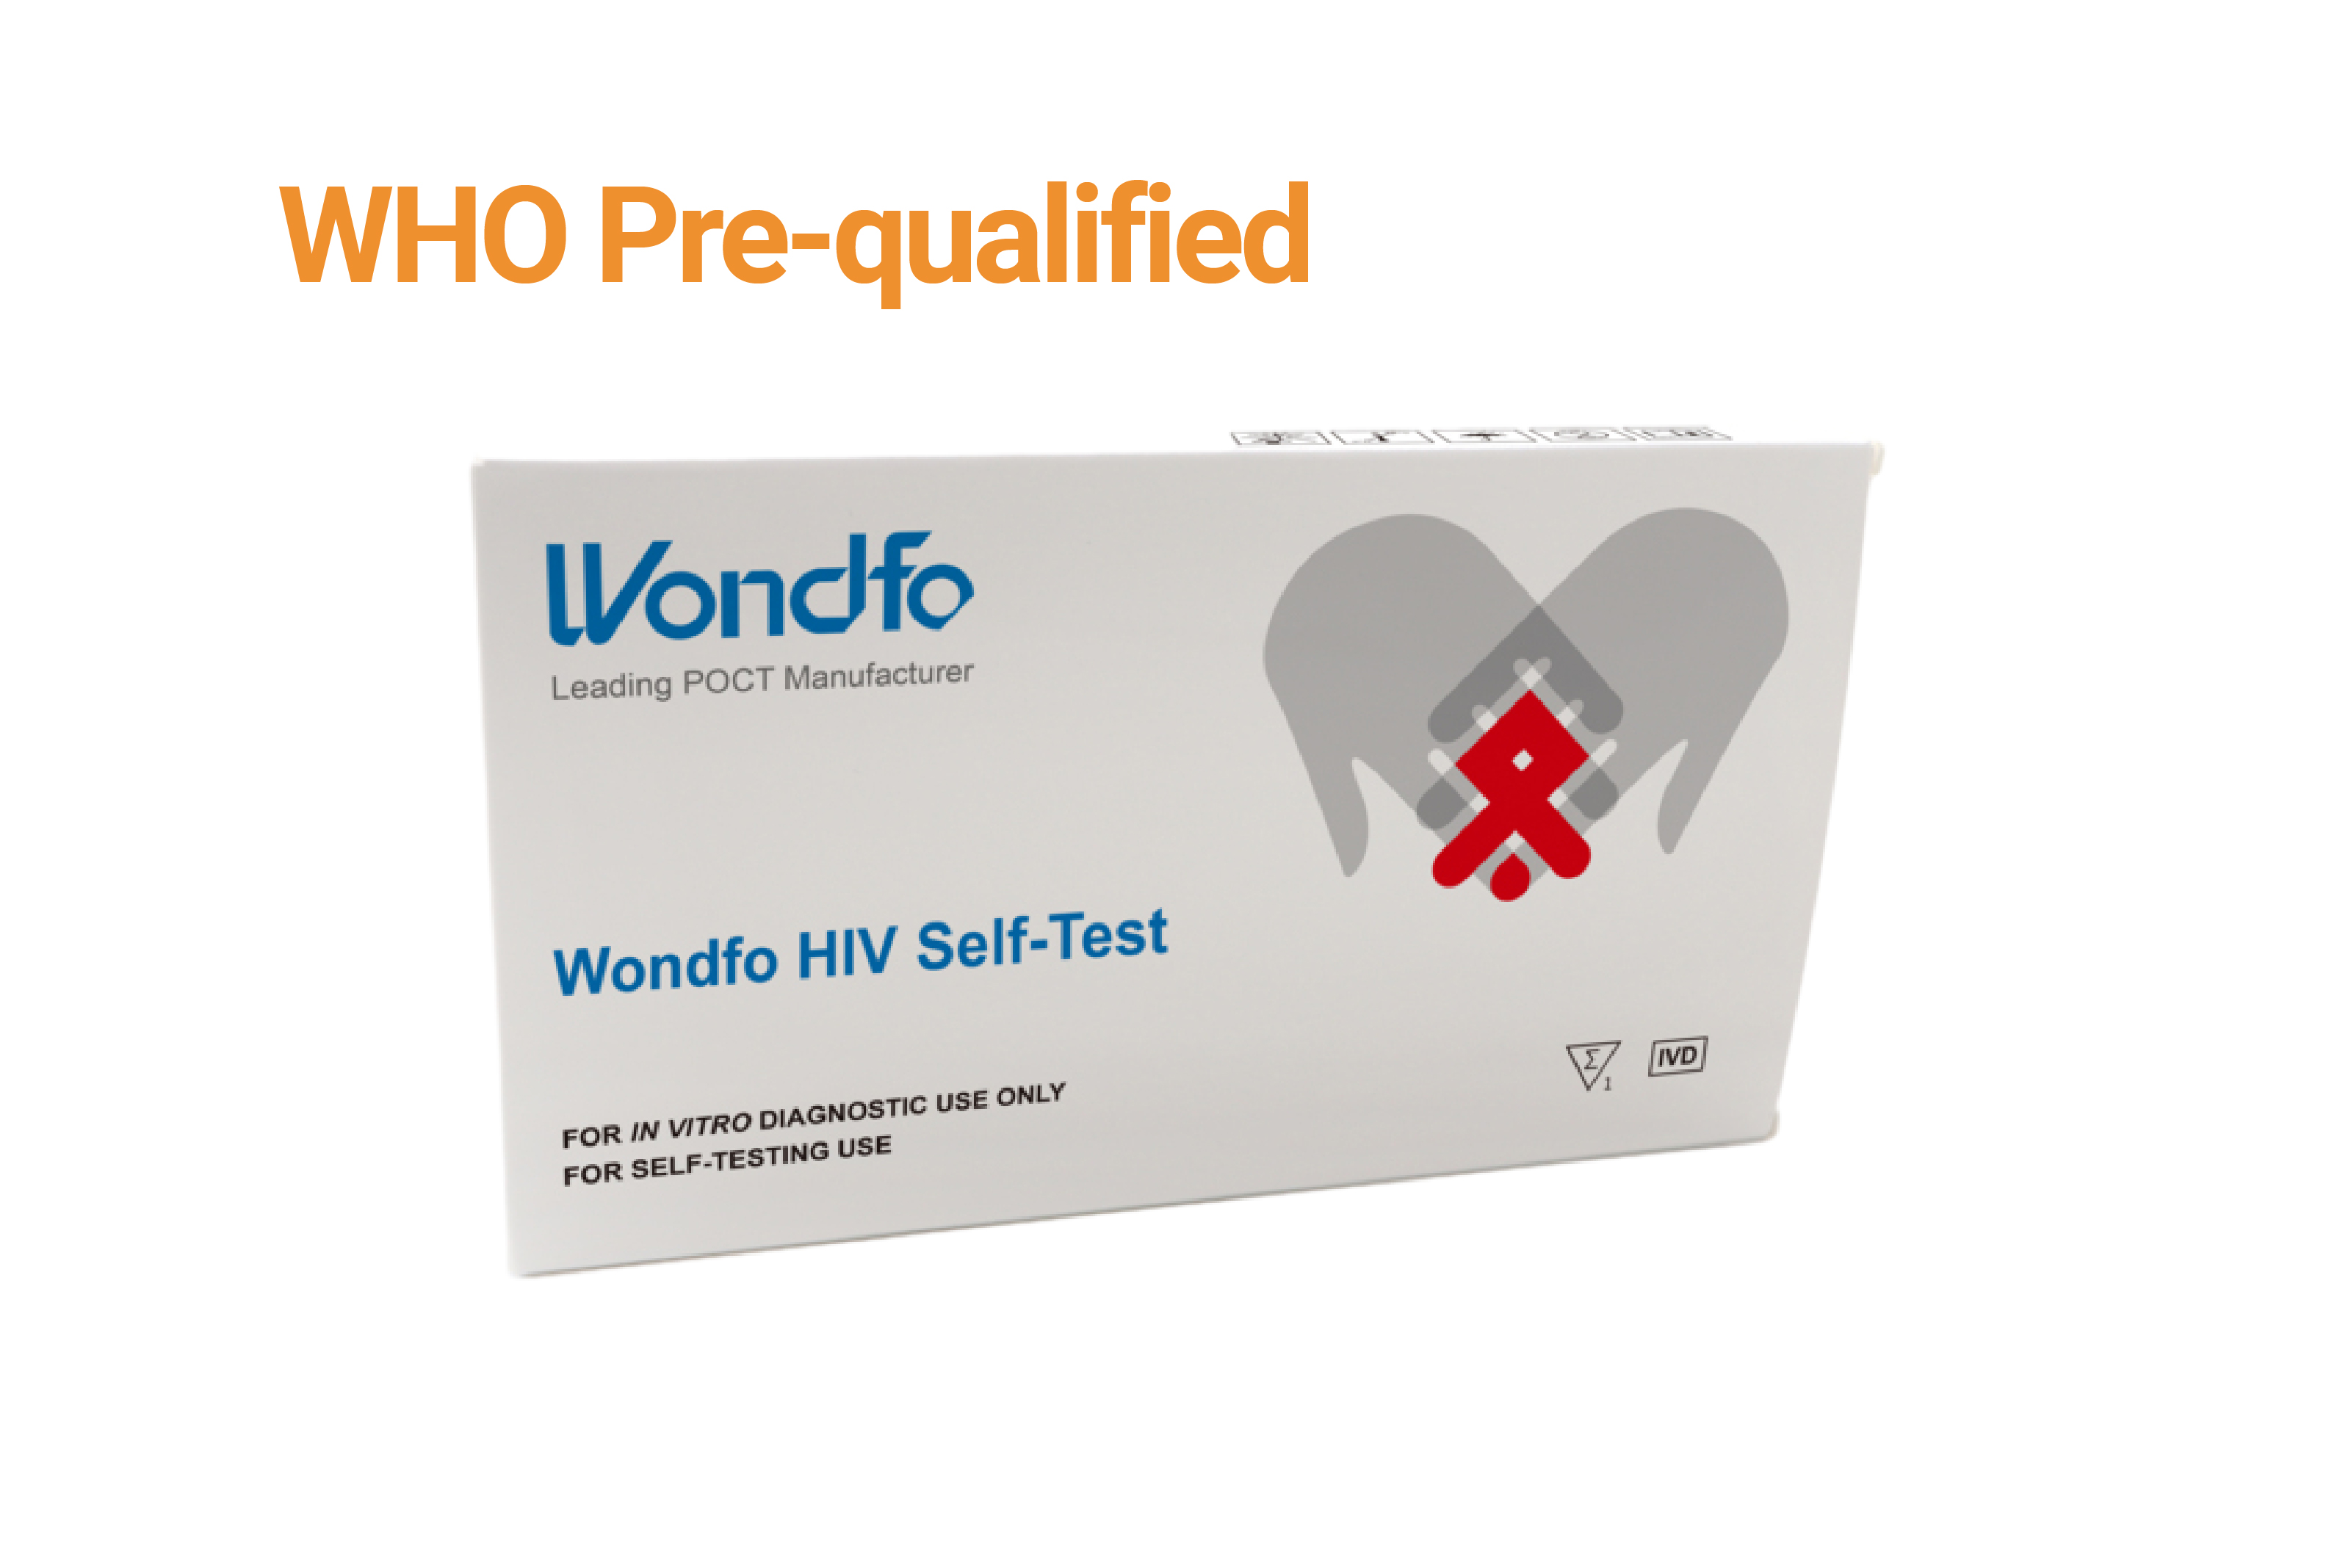 Wondfo HIV Self-Test